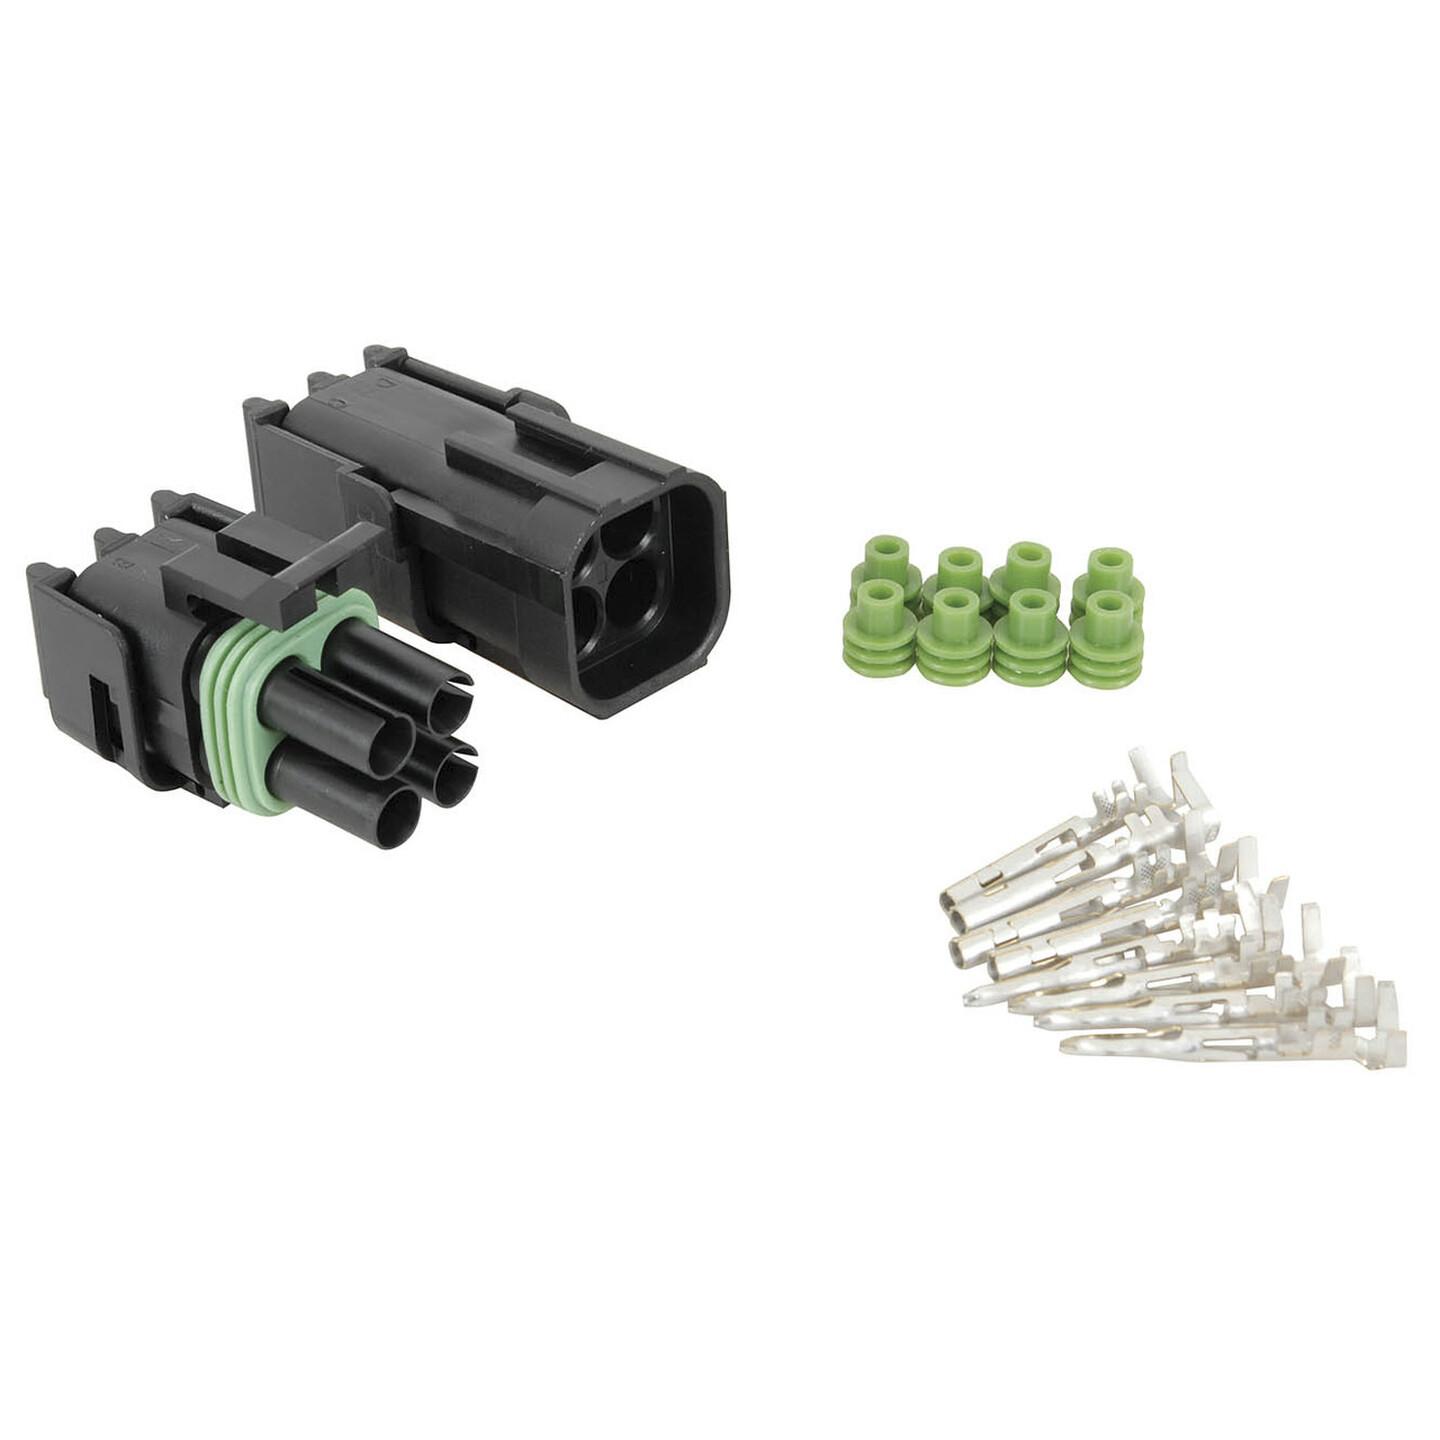 Automotive Waterproof FS Plug and Socket Set - 4 way